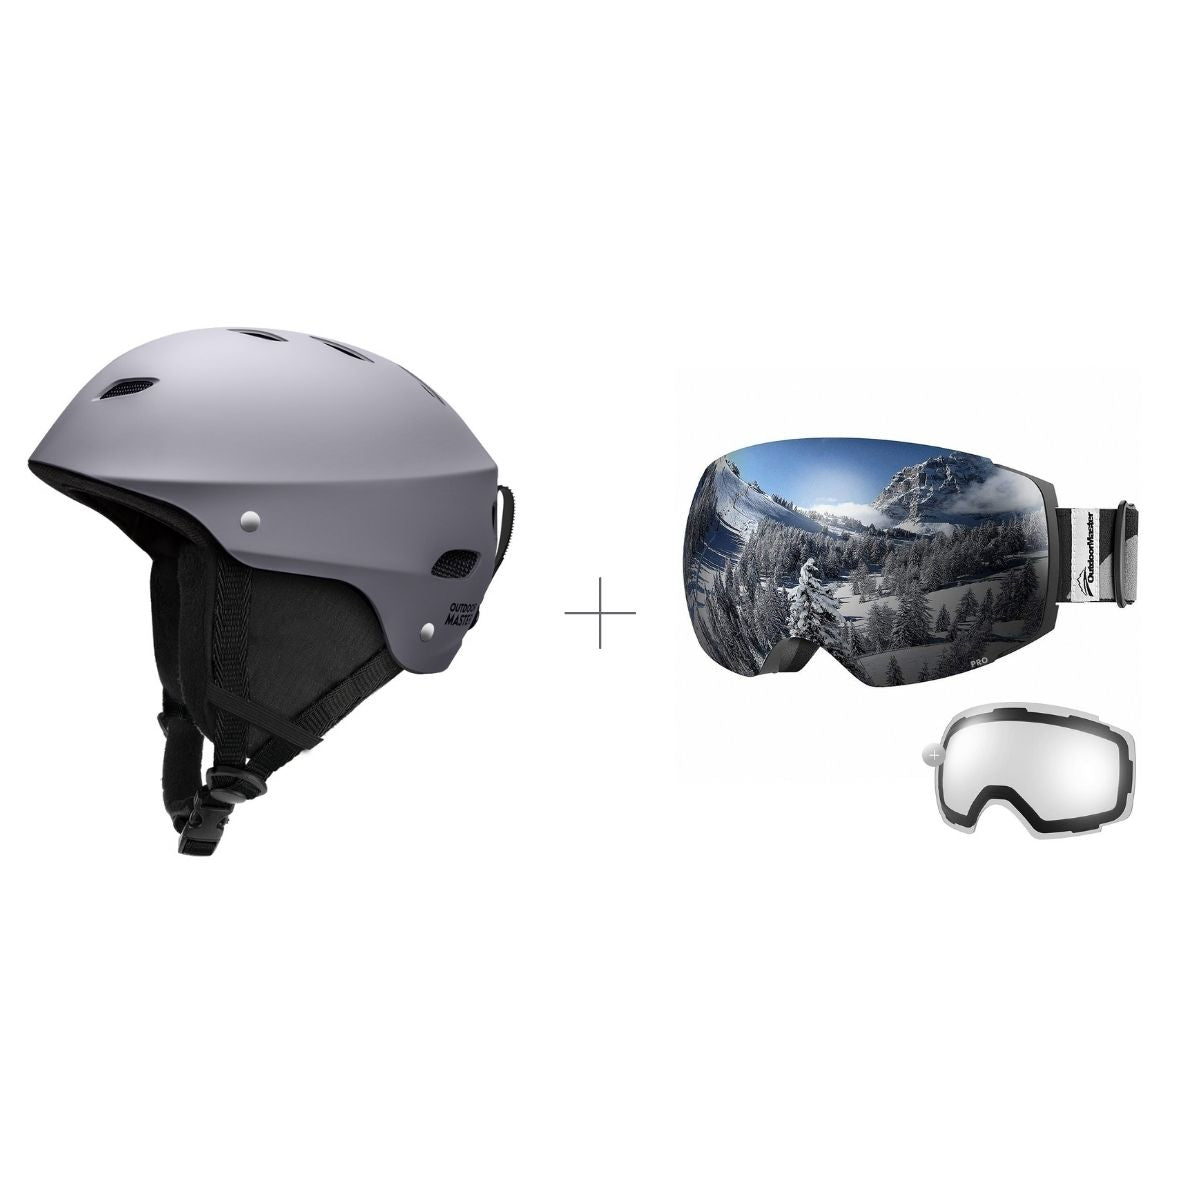 Bundle Sale - Pro Goggle + Lens + Kelvin Helmet